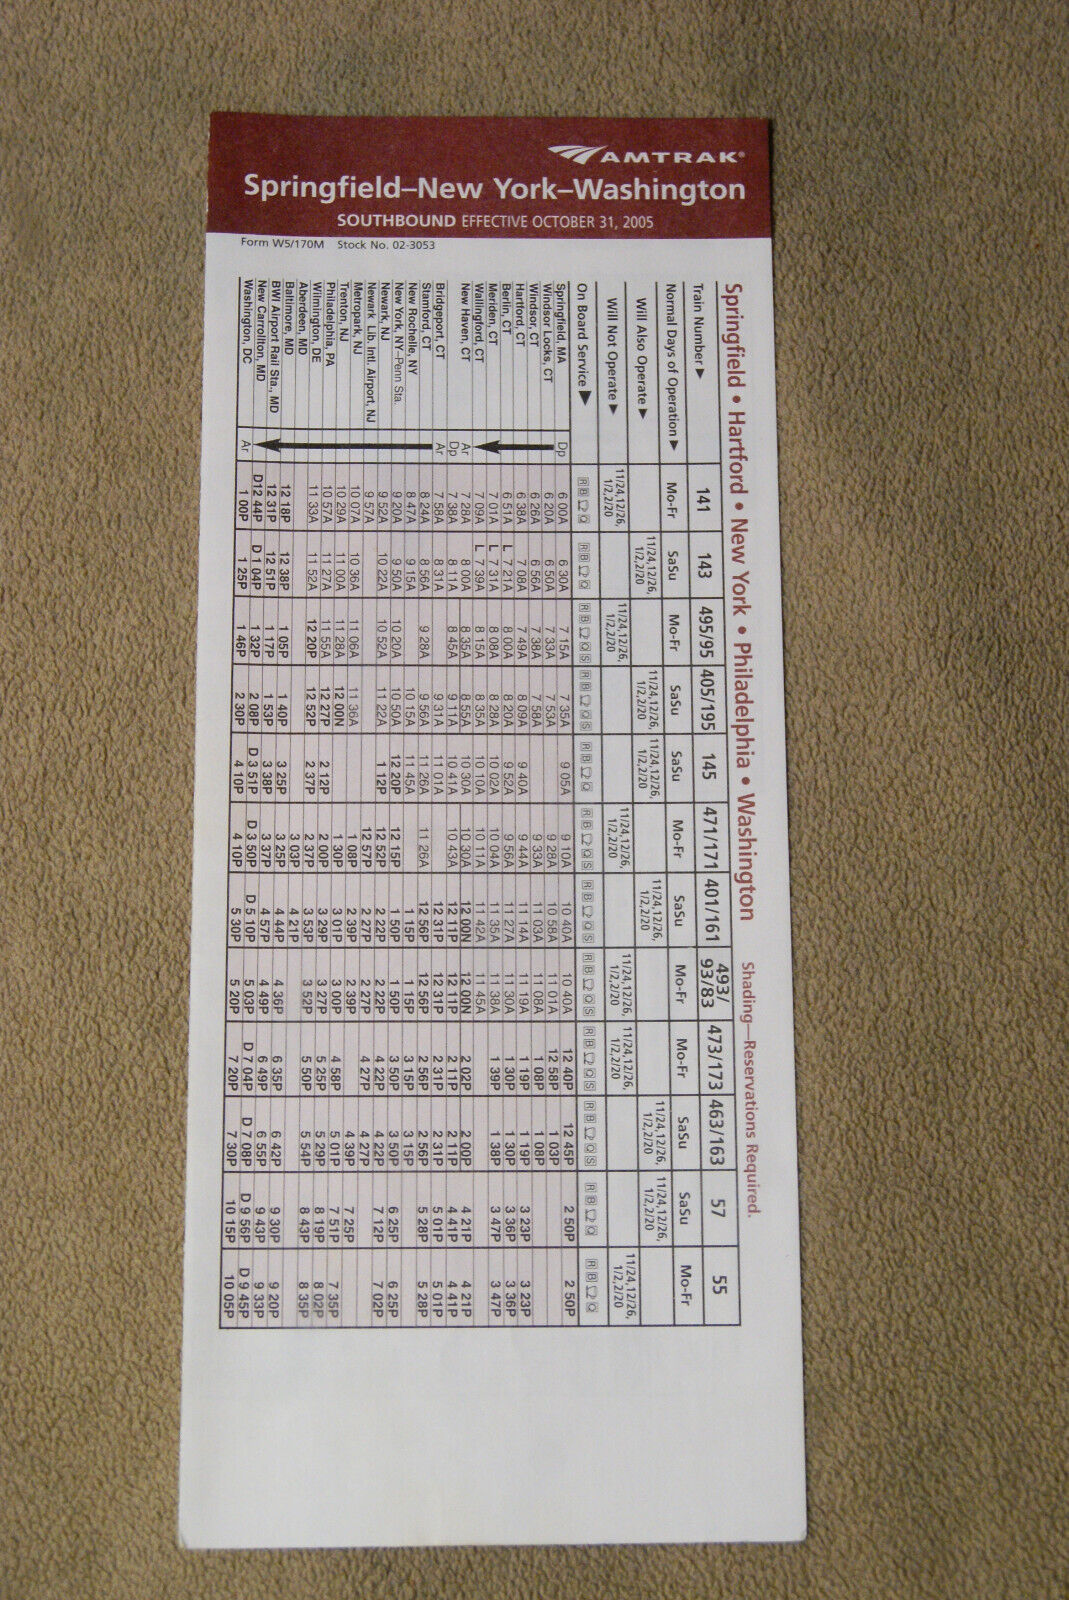 Amtrak Timetable - Springfield-New York-Washington - Oct 31, 2005